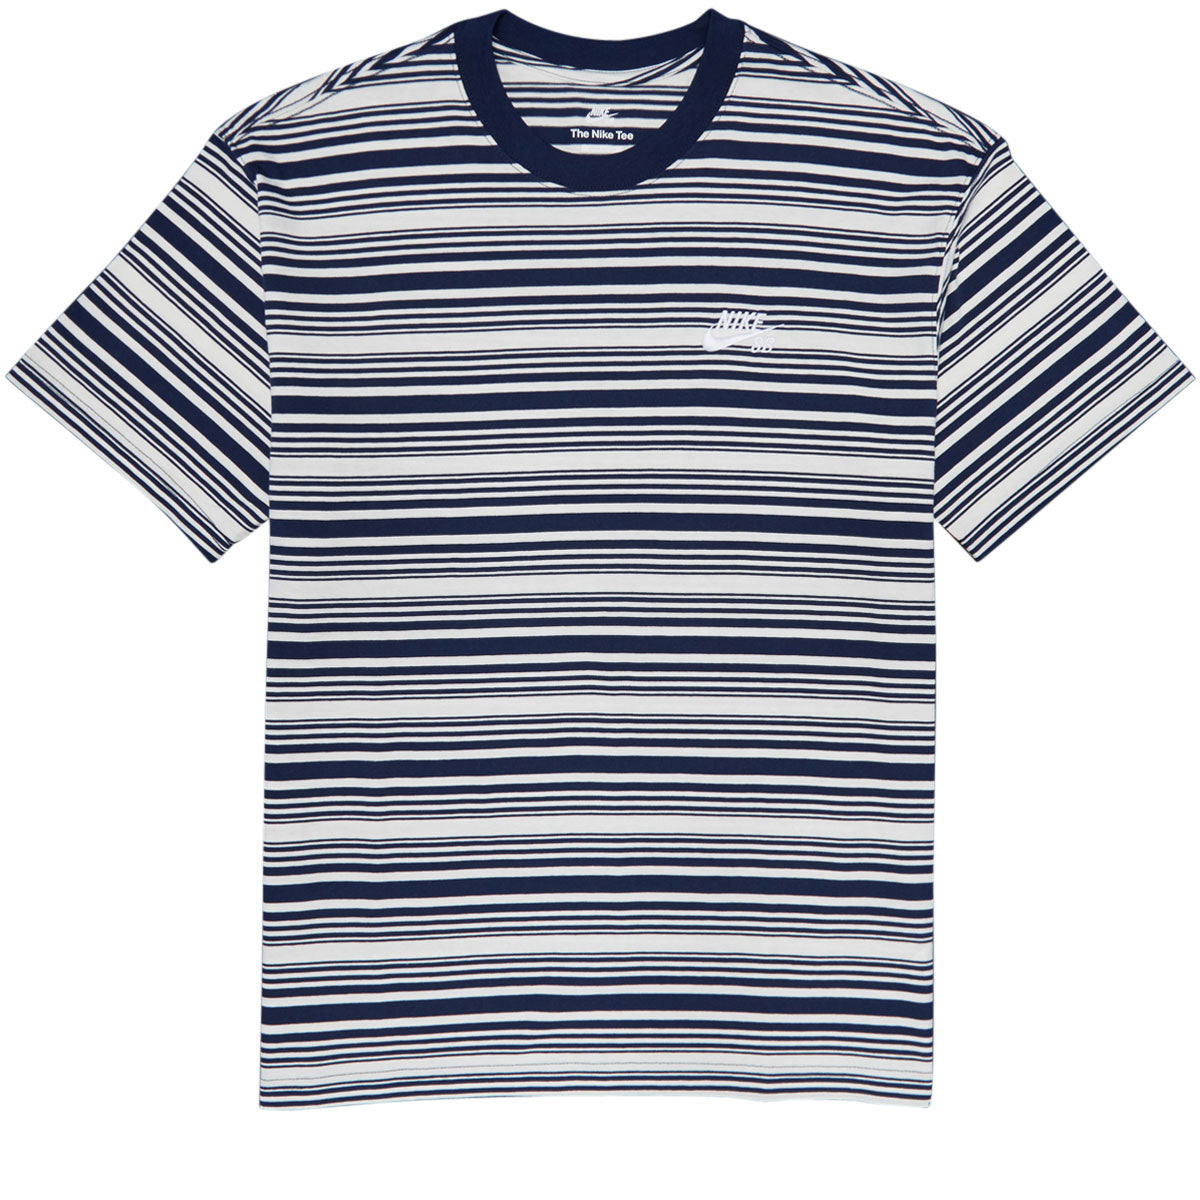 Nike SB Striped Skate T-Shirt - Midnight Navy image 1